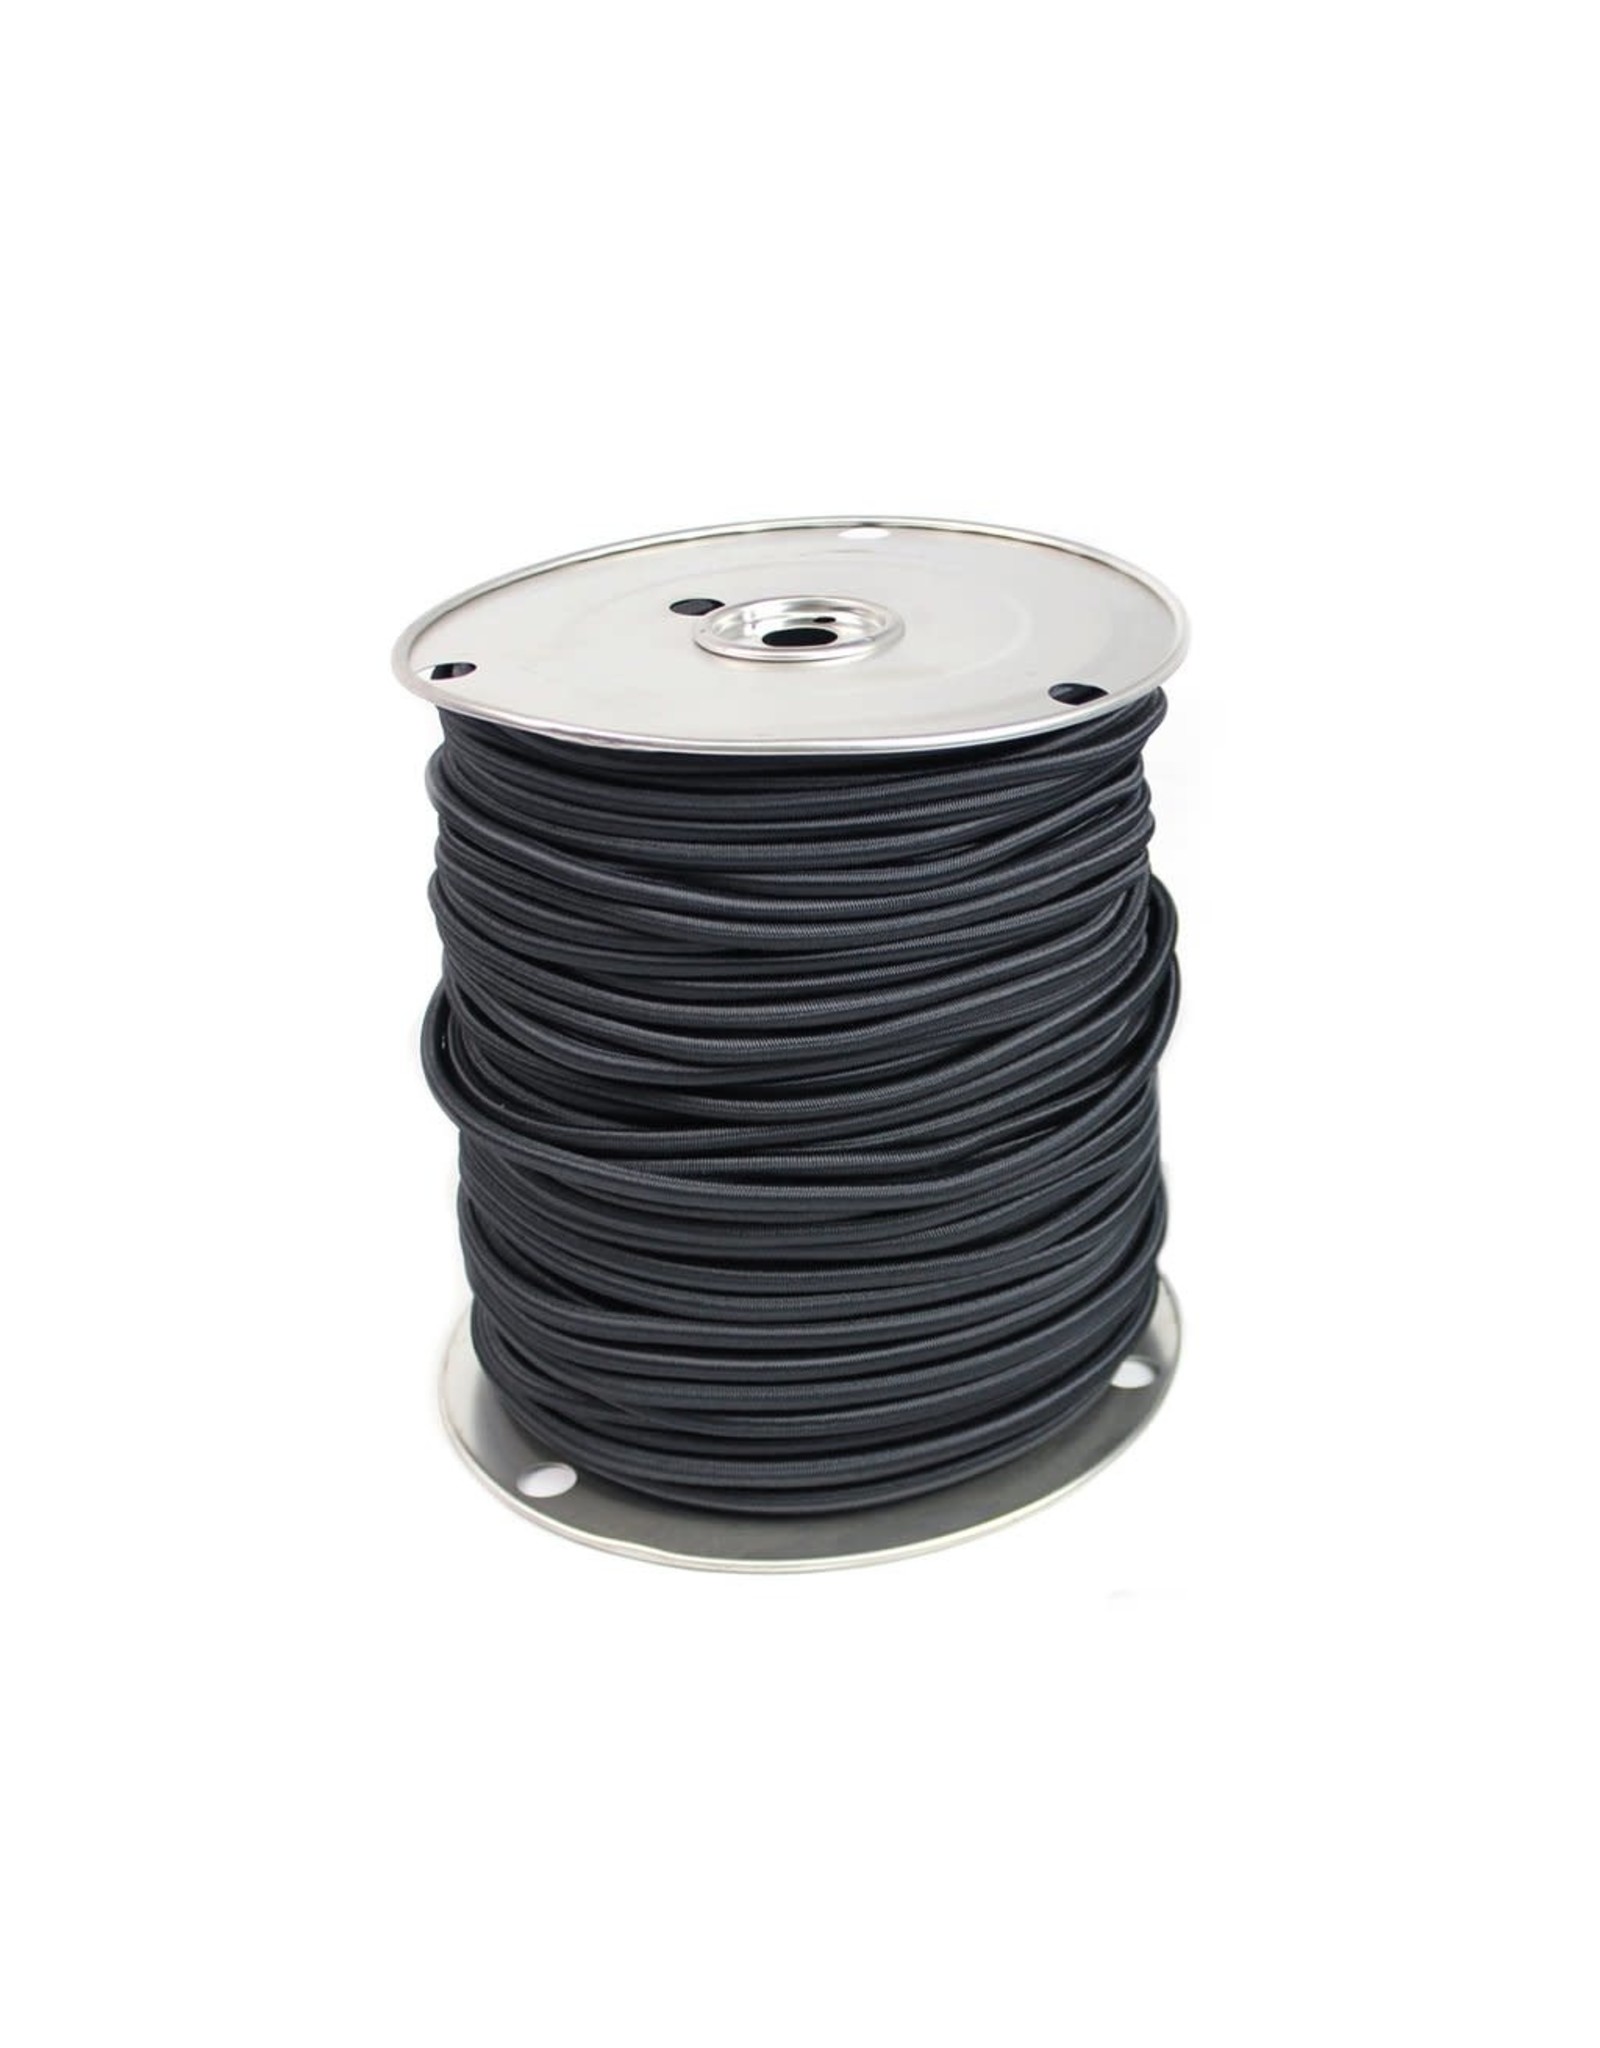 Atlan Atlan round elastic cord 6.4 mm (Bungee) sold by foot